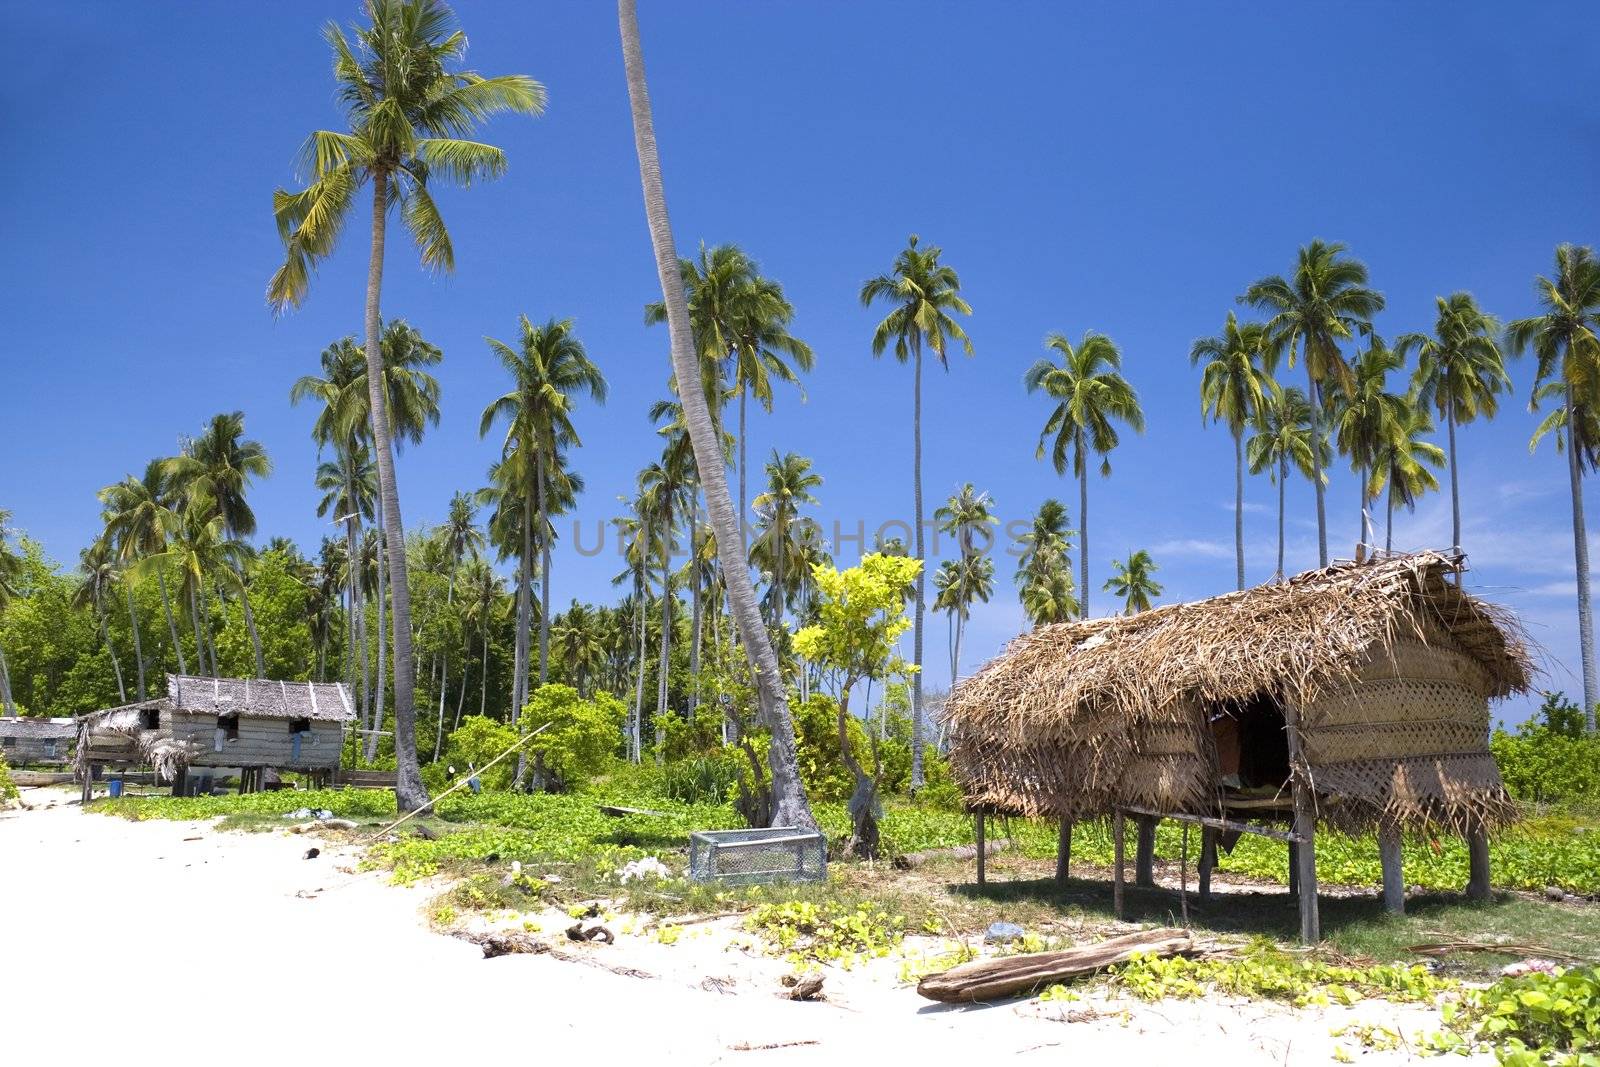 Native Hut on Tropical Island by shariffc